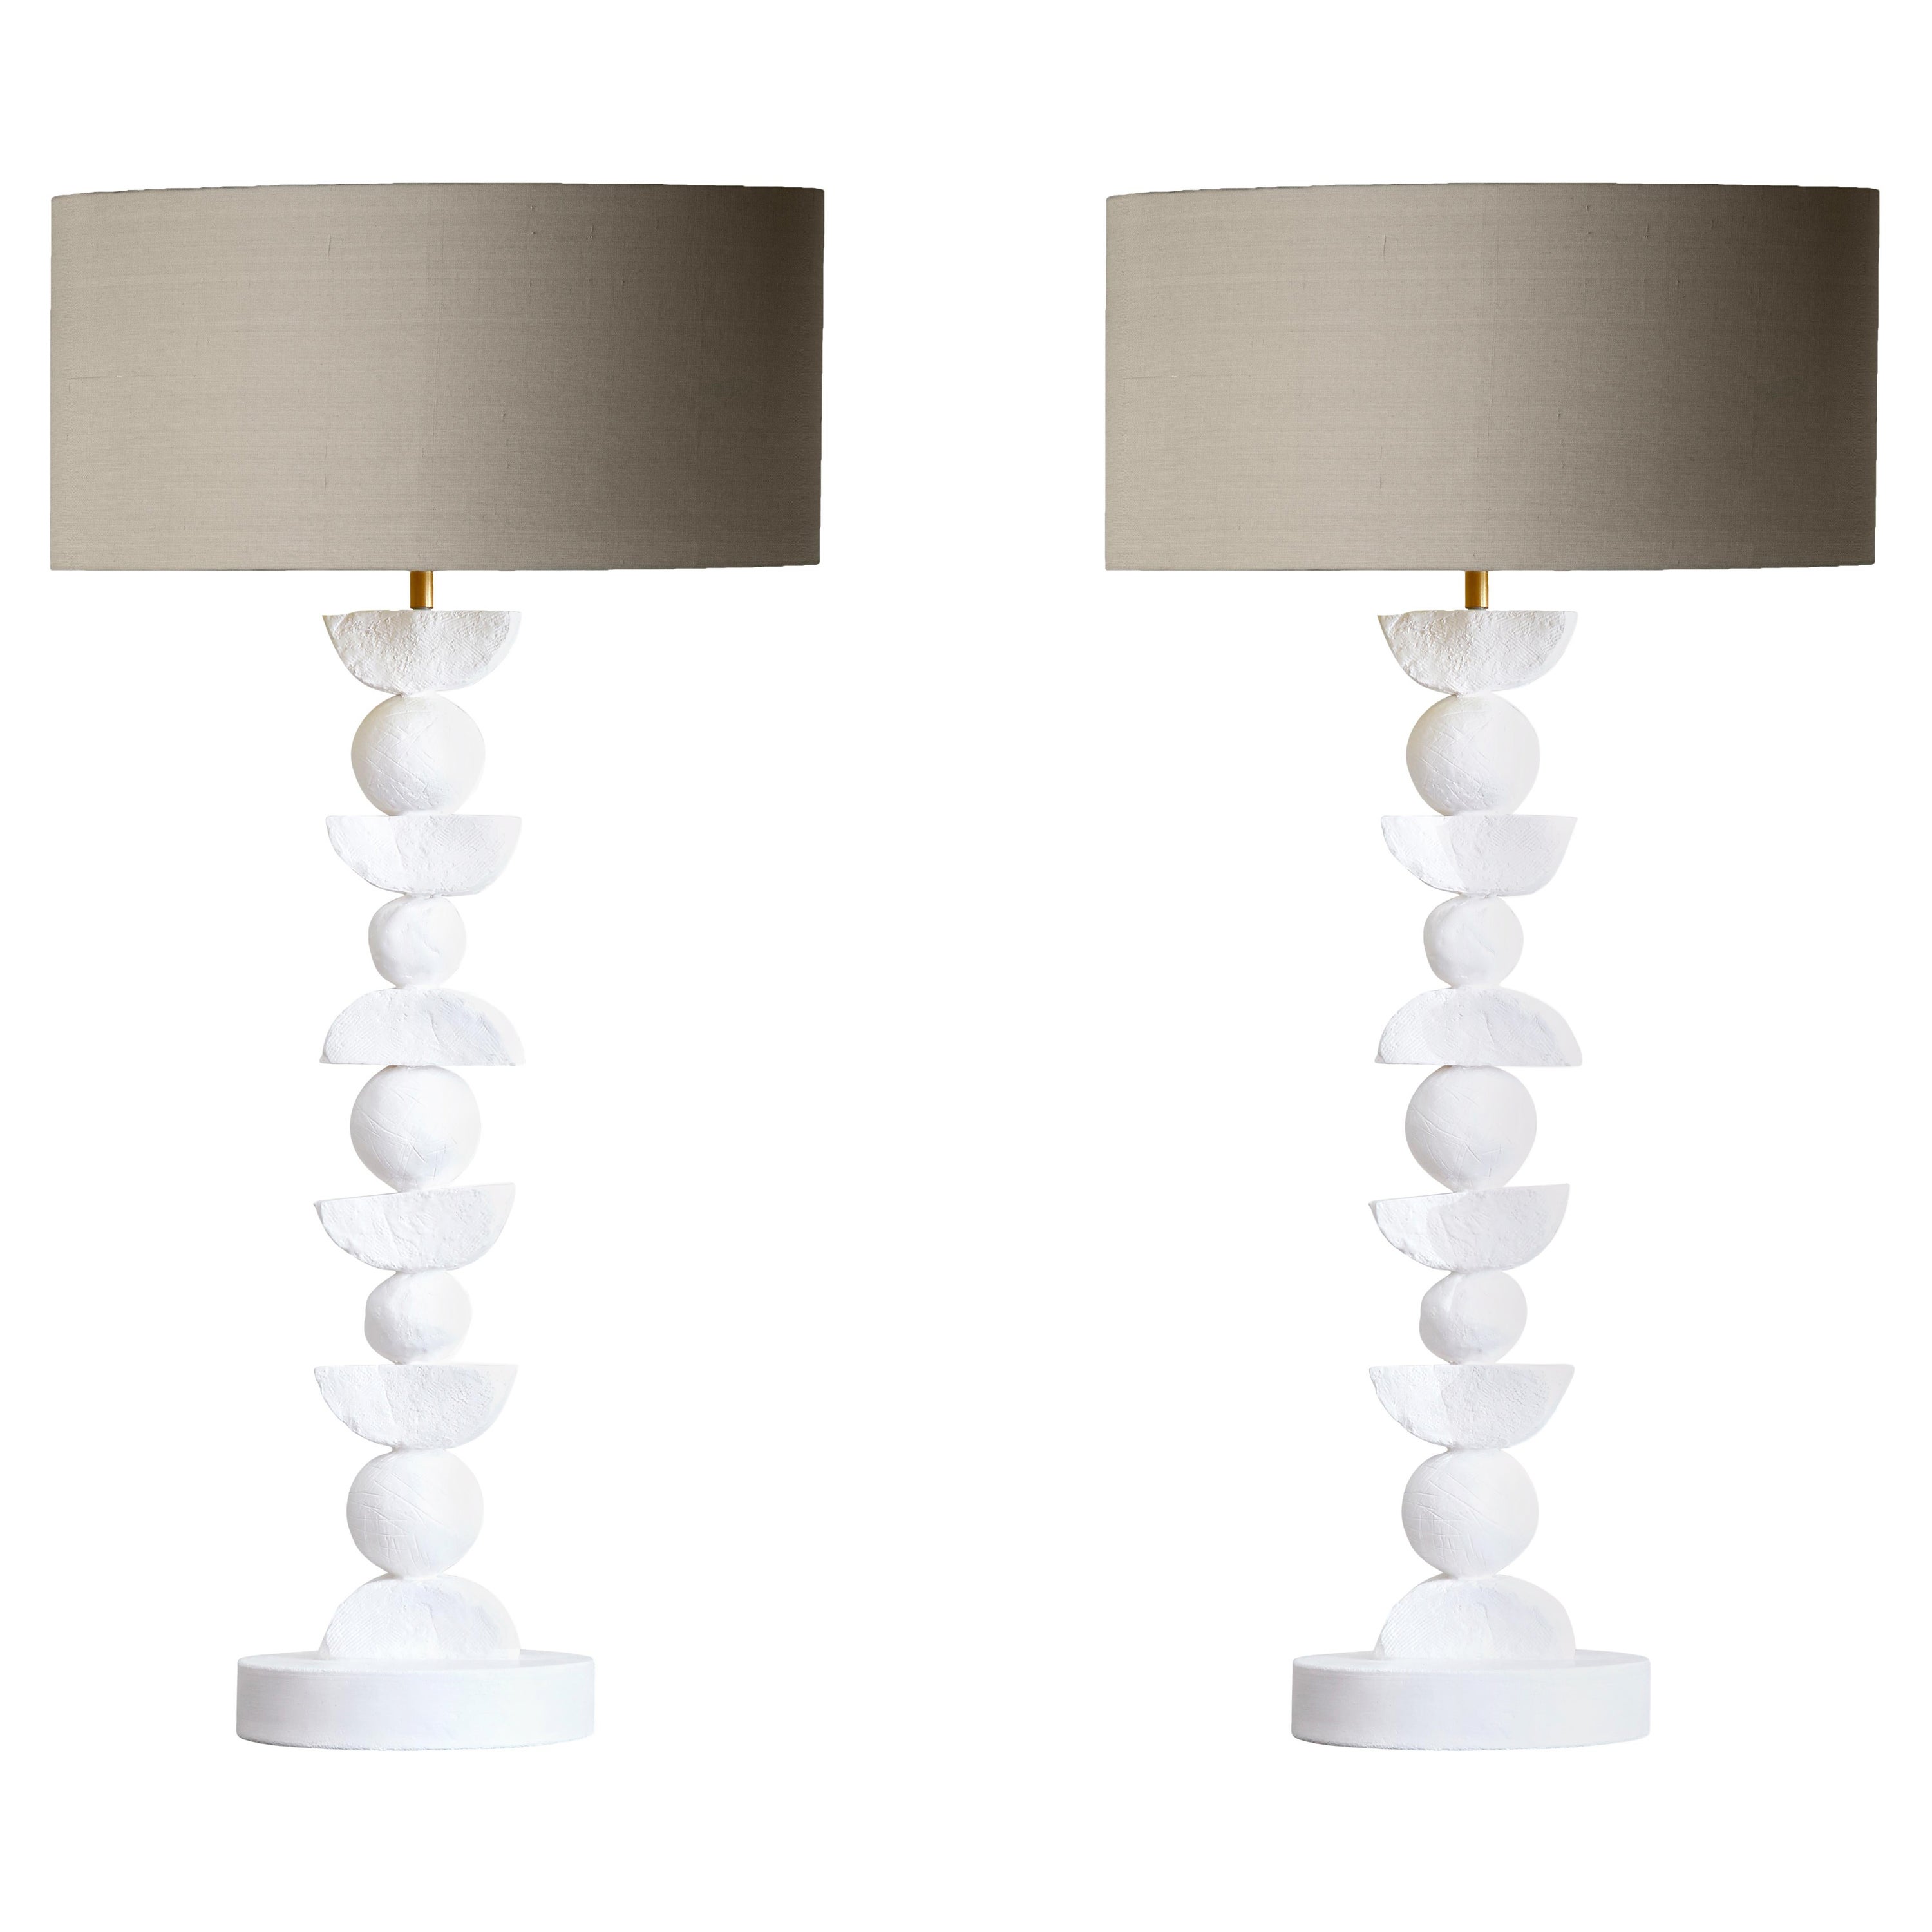 European, Organic, Textured Silhouette Table Lamp by Margit Wittig in White